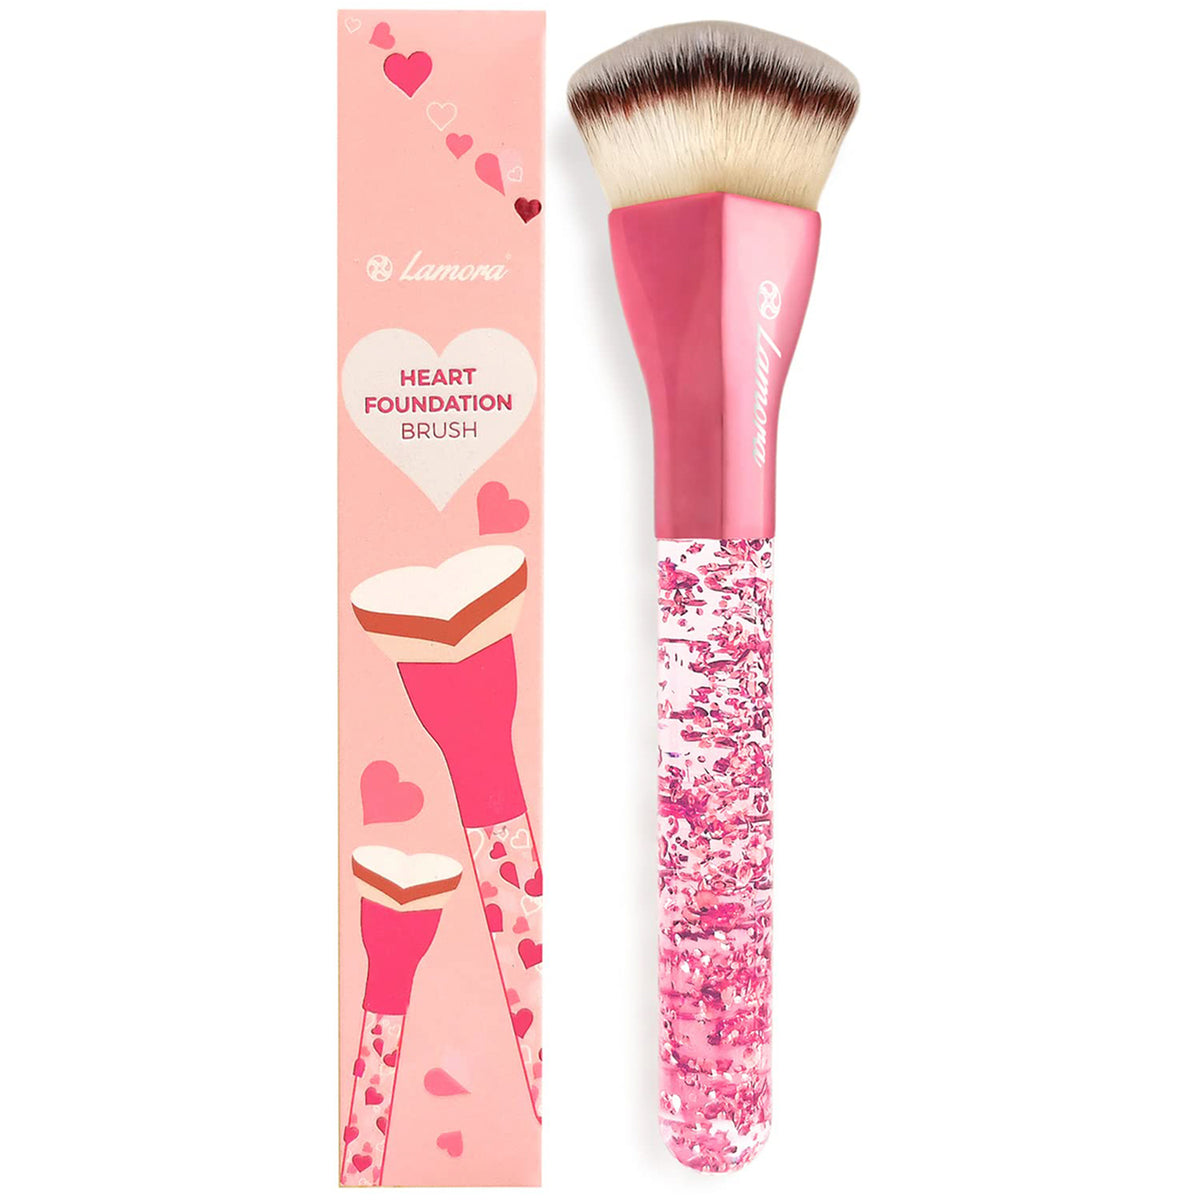 Foundation Brush Heart Pink Lamora Beauty